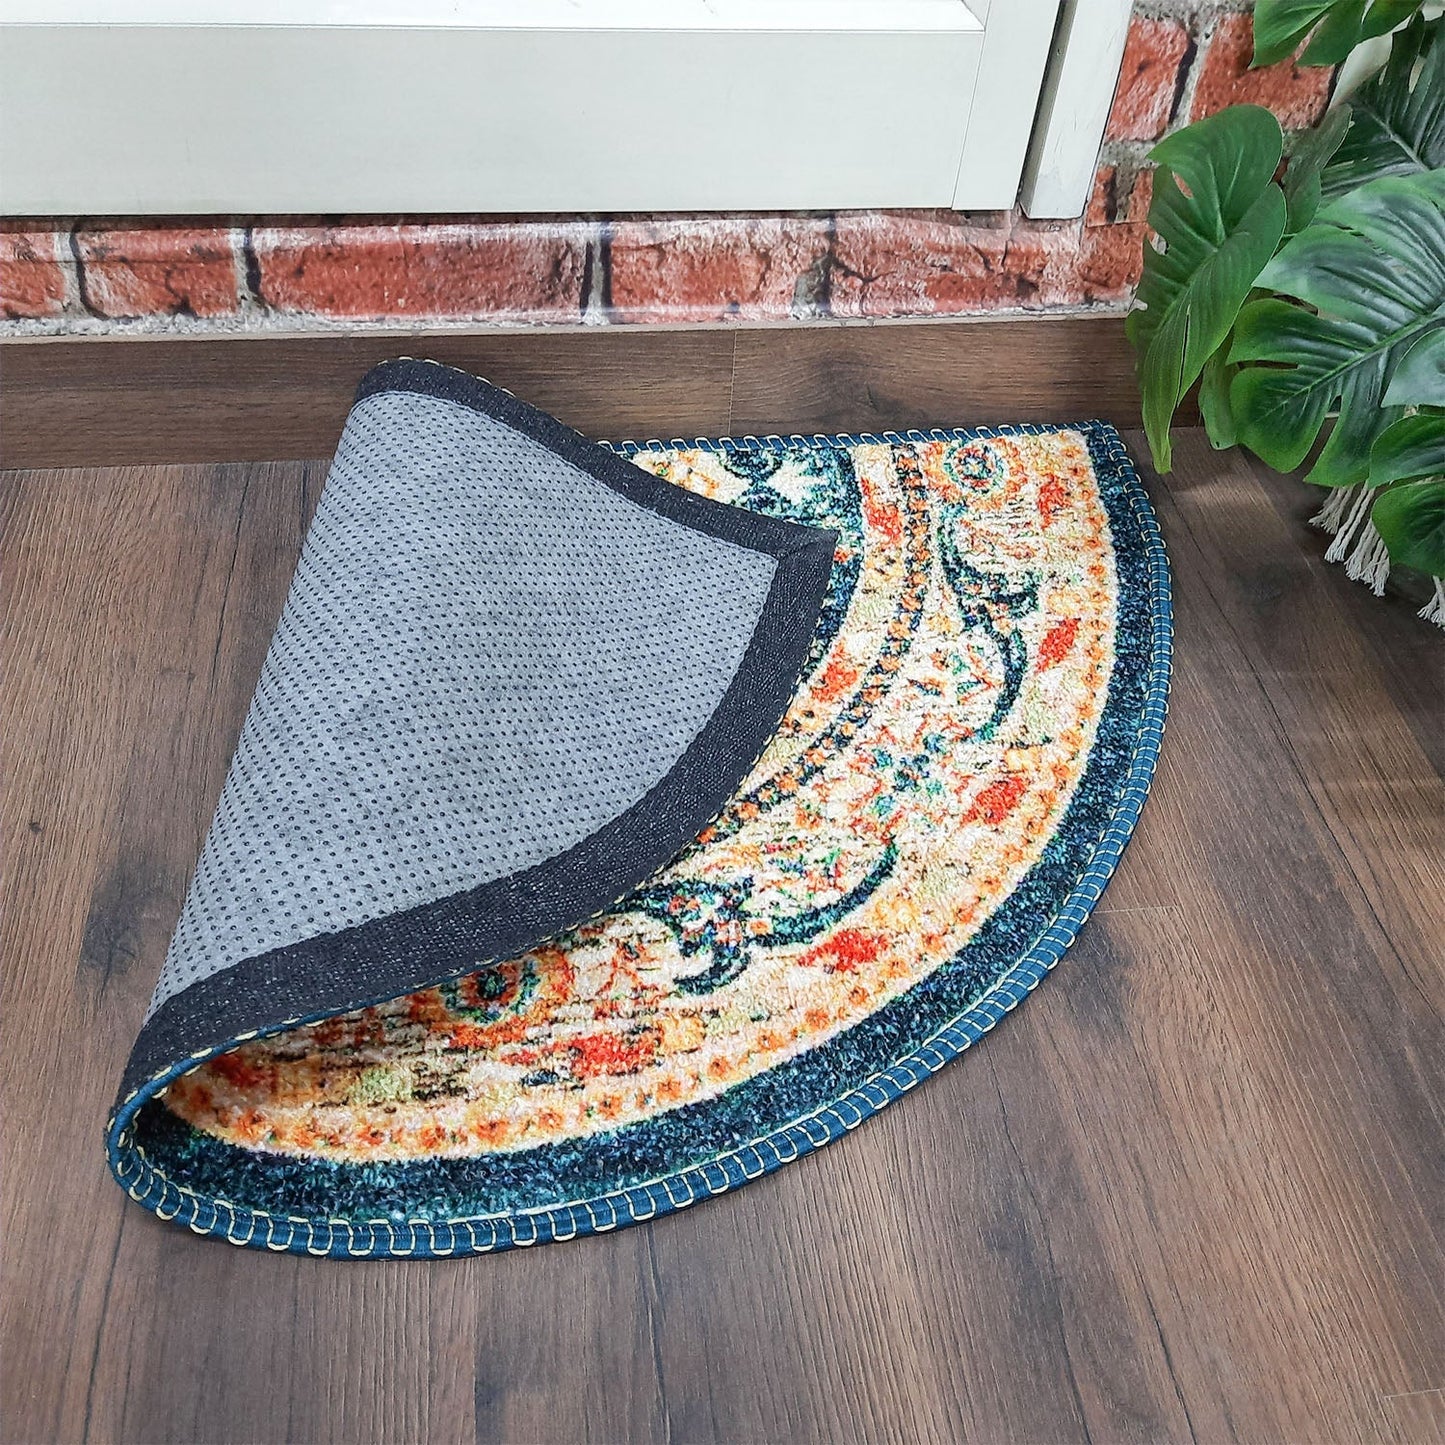 Avioni Home Floor Mats in Beautiful Traditional Persian Design | Anti Slip, Durable & Washable | Outdoor & Indoor